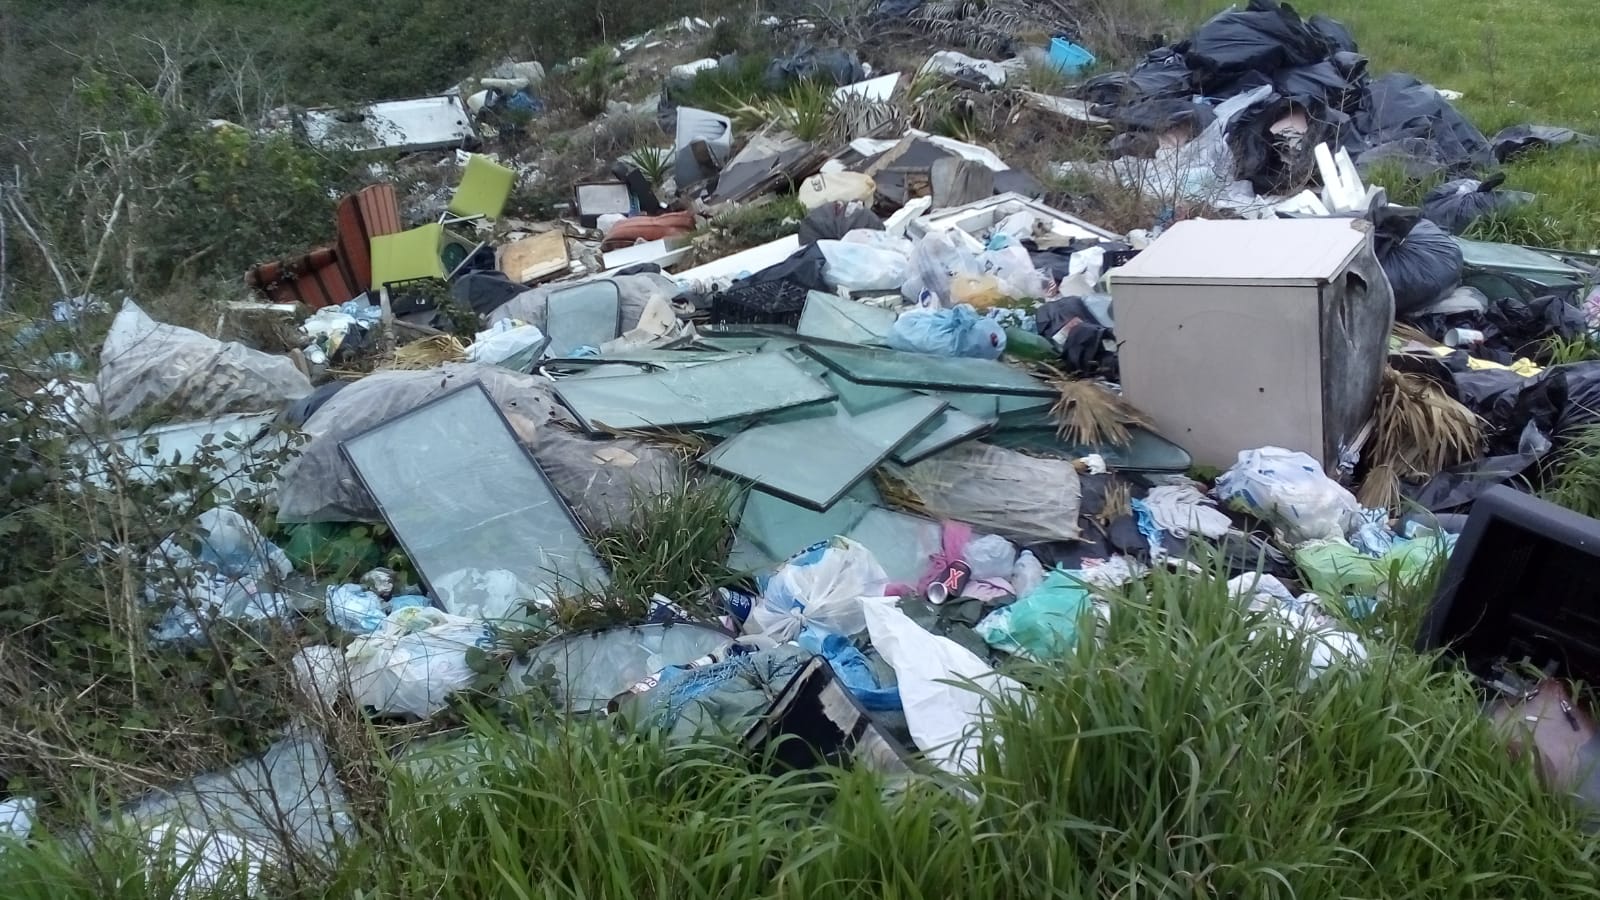 VARCATURO/ Discarica illegale di rifiuti speciali scoperta da un drone: denunciata una 64enne